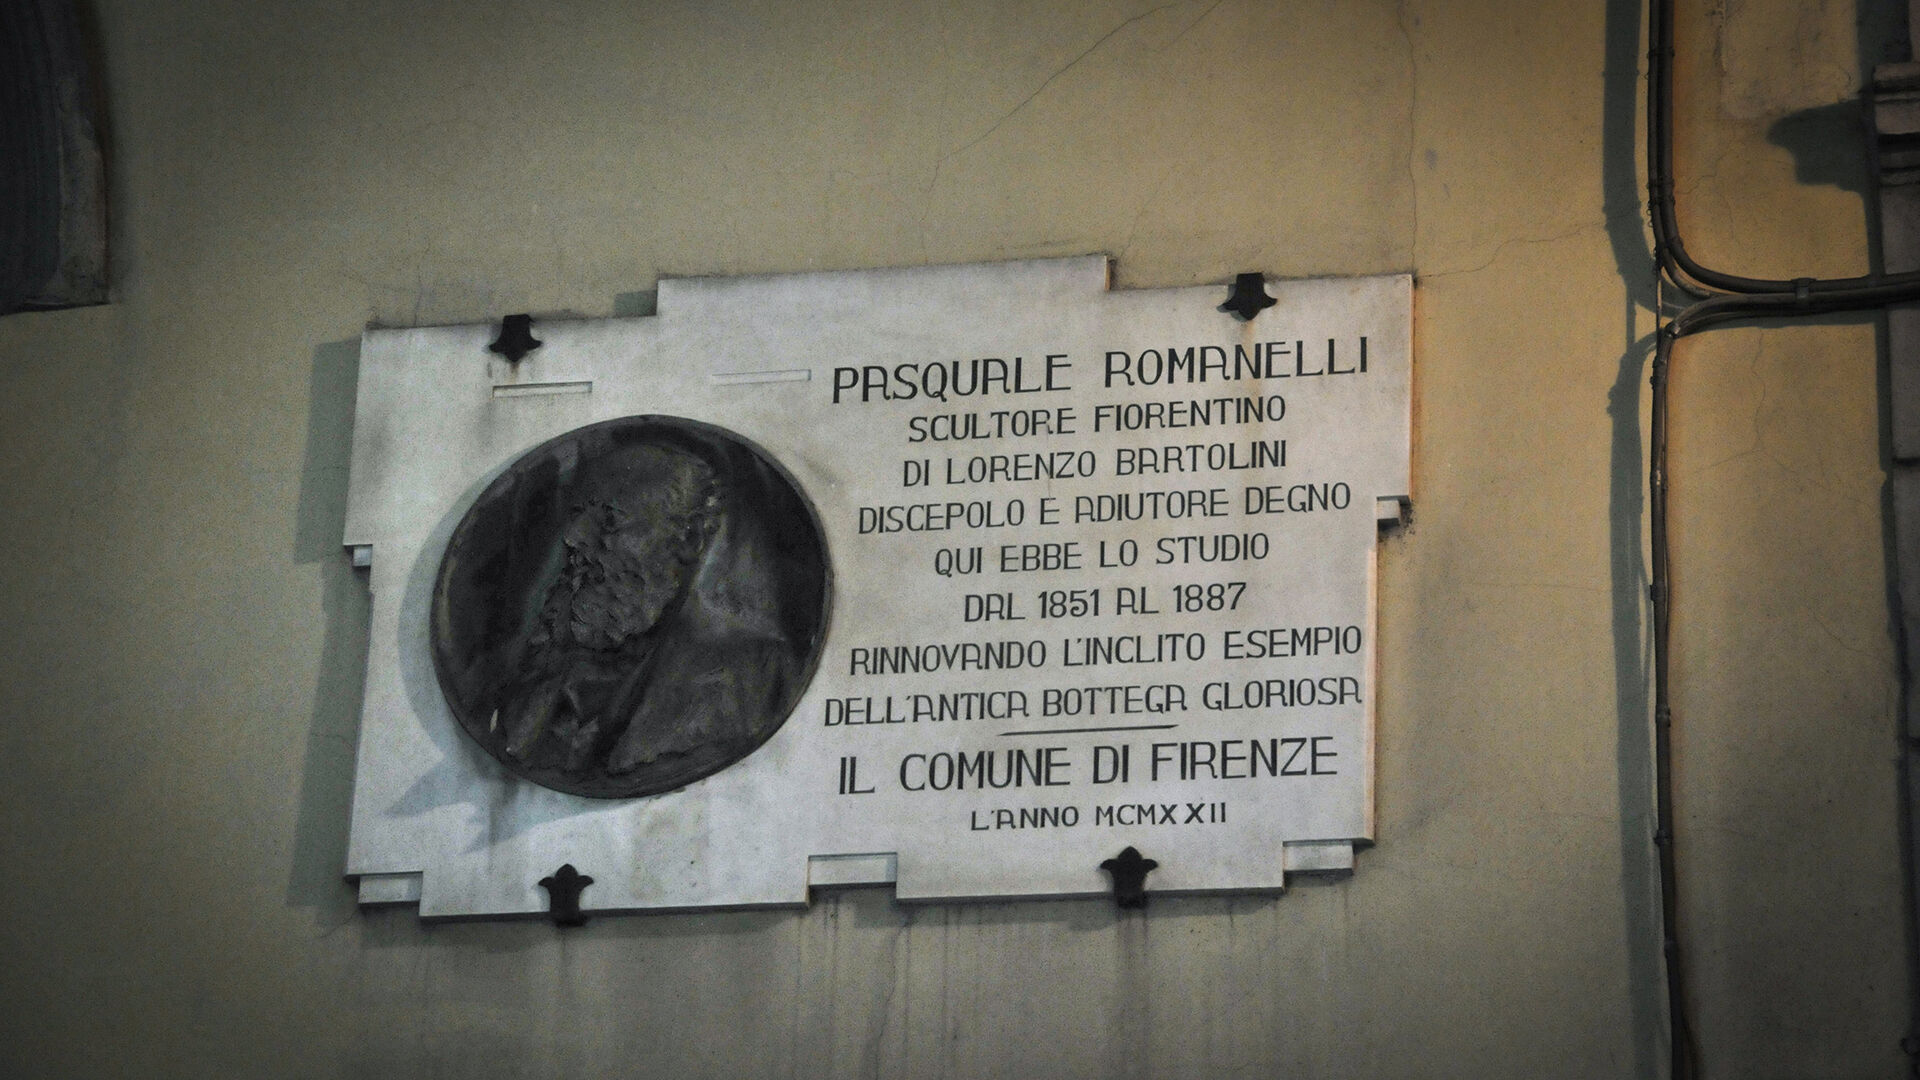 Giovanni Raspini presents bronzobianco